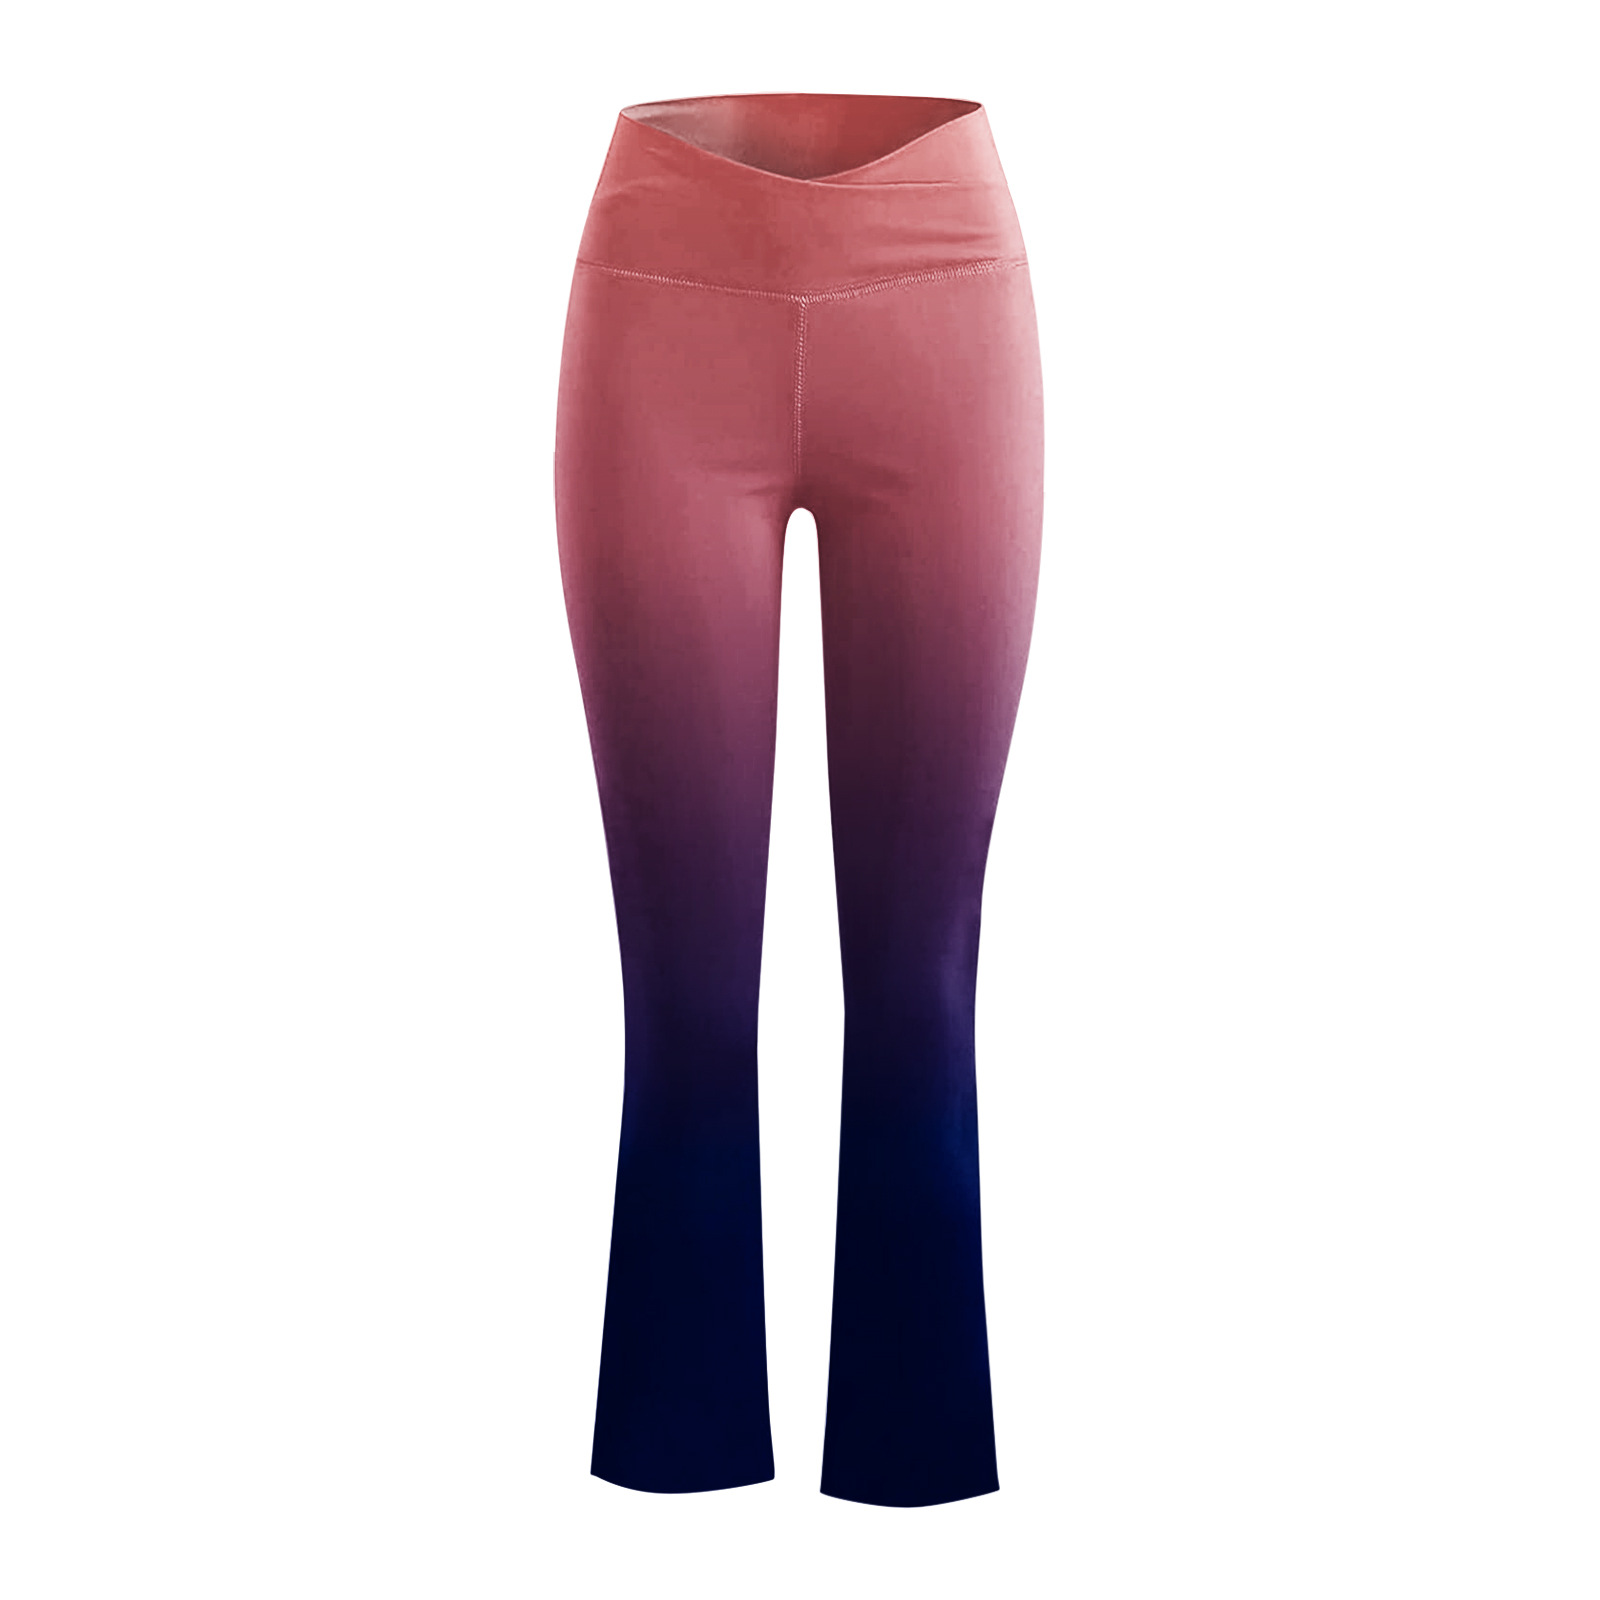 Spodnie do jogi Tie Dye Flare Super Factory |ZHIHUI